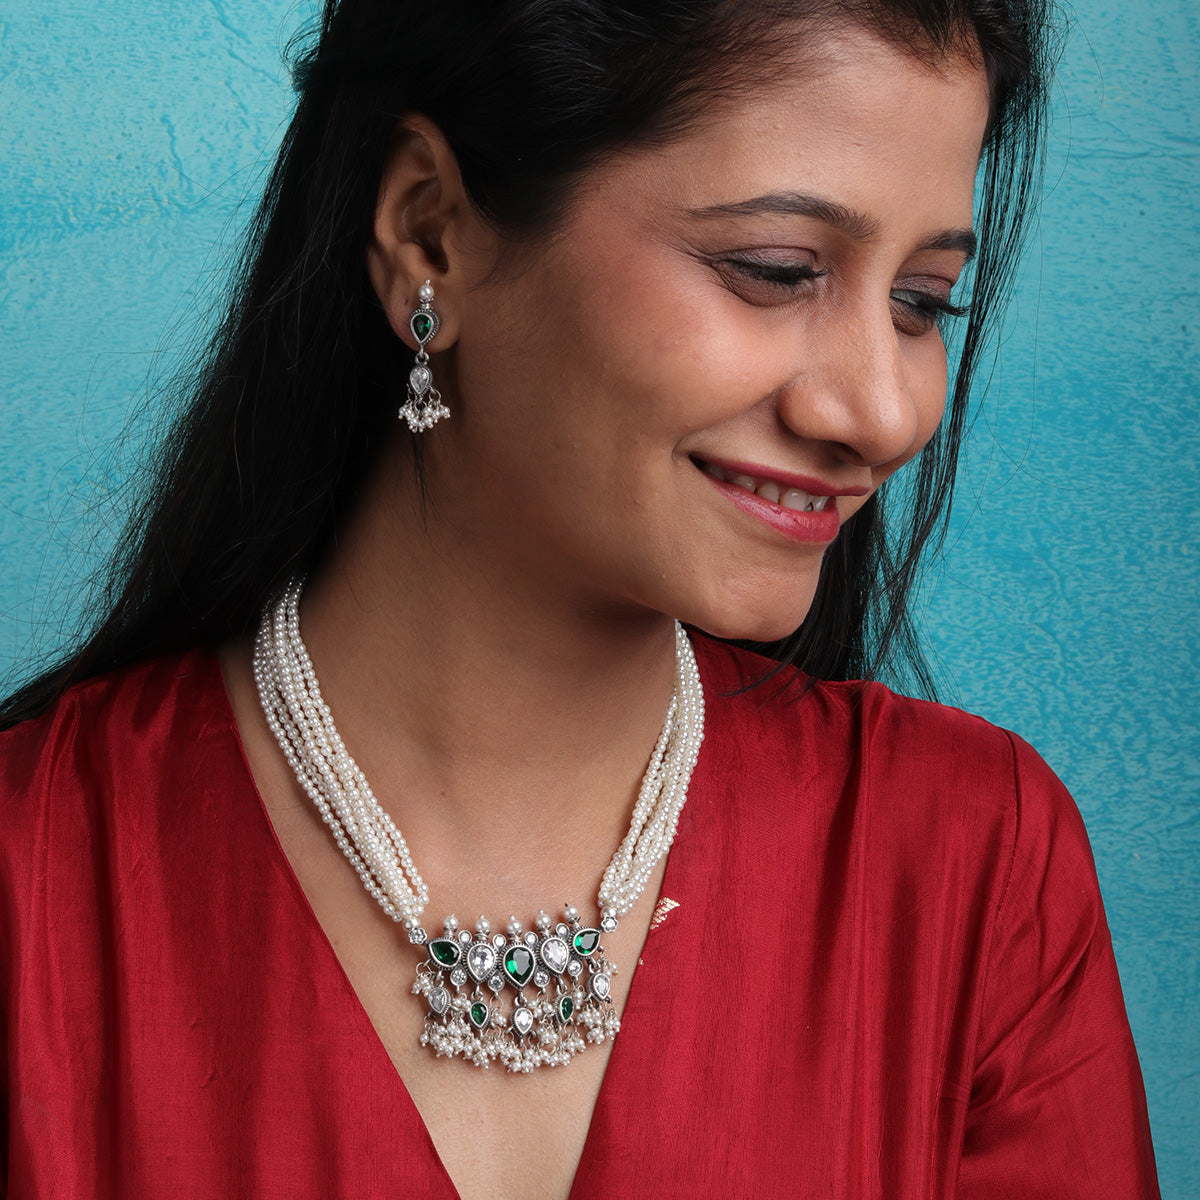 Maharashtrian Tanmani Silver Necklace (Green & White) by Moha